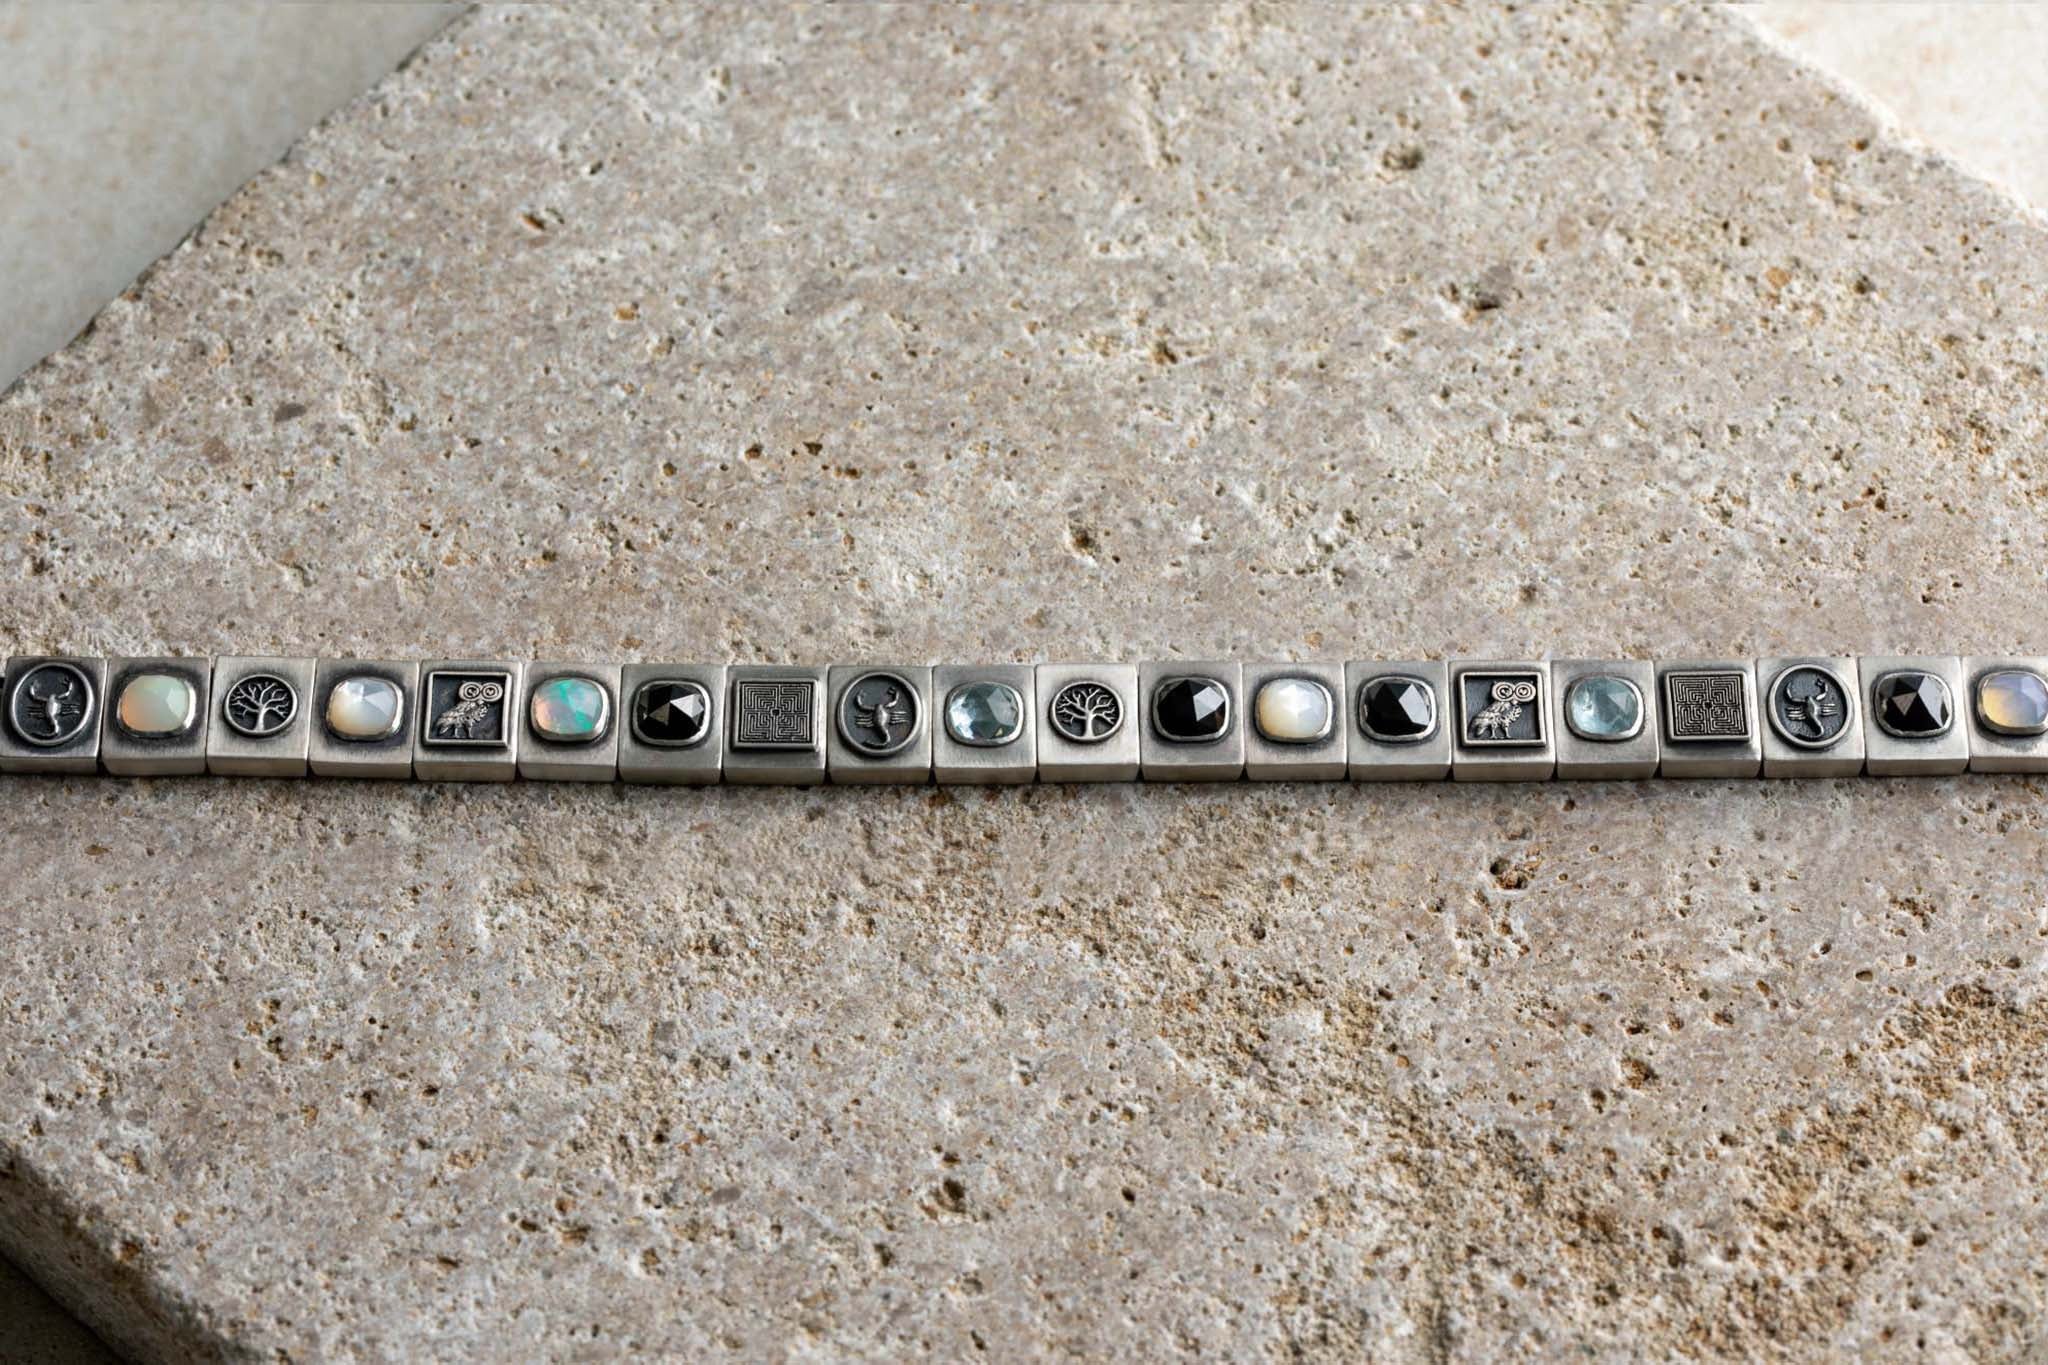 Varnos Black Diamond - Aquamarine - Opal - Mother of Pearl Bracelet (11mm) (8539834089807)